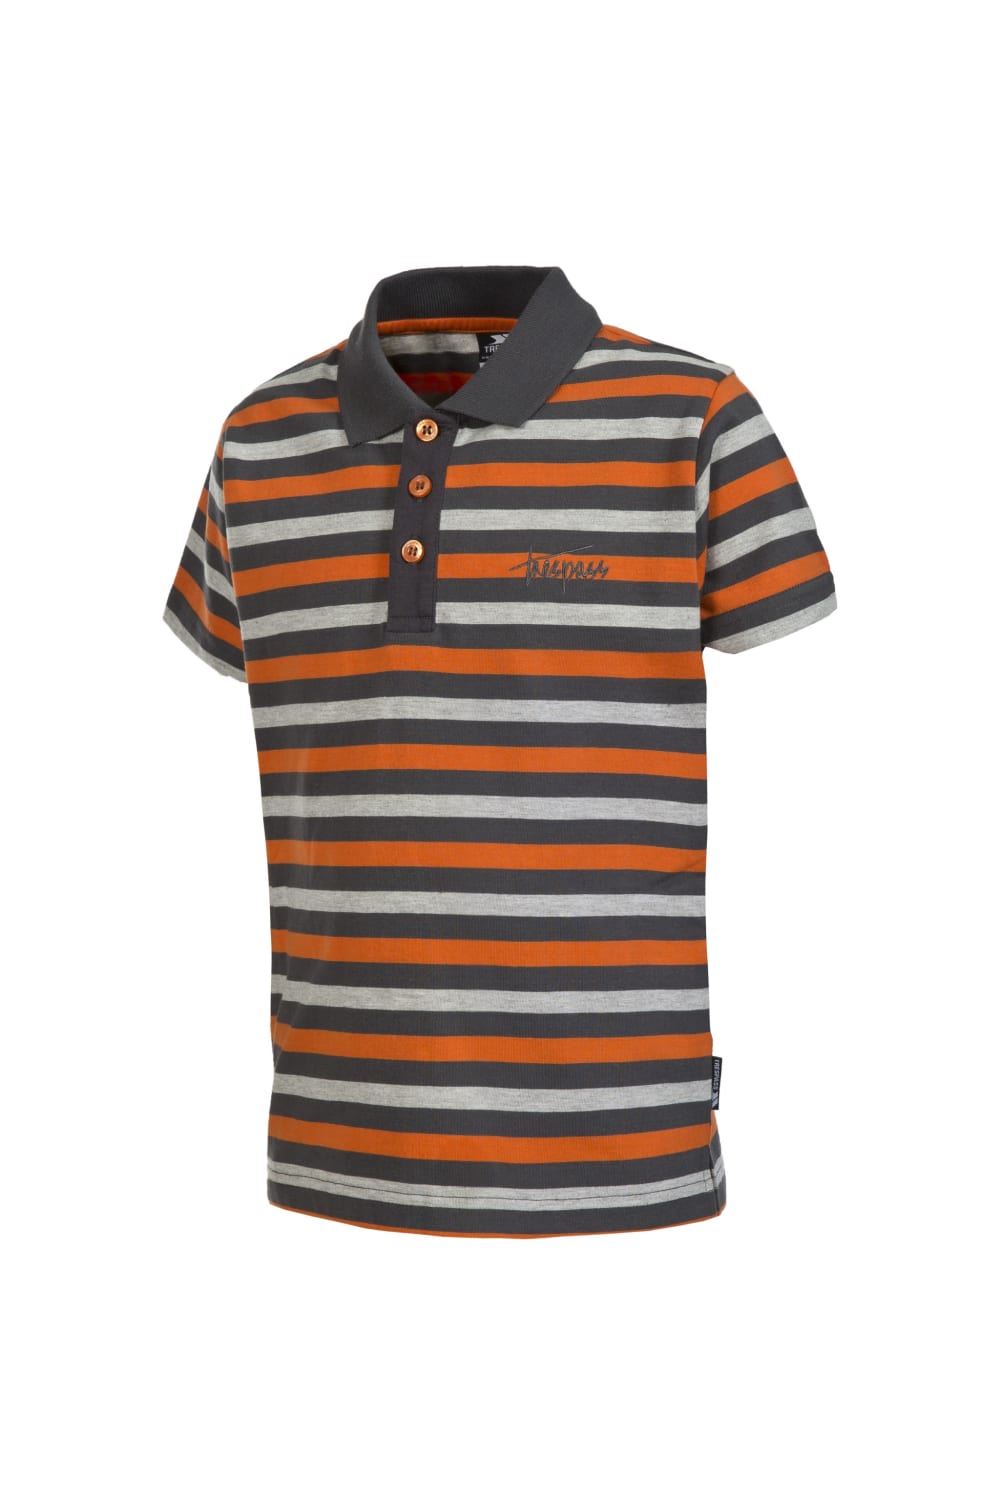 Trespass Childrens Boys Garth Striped Polo Shirt (Flint Stripe)